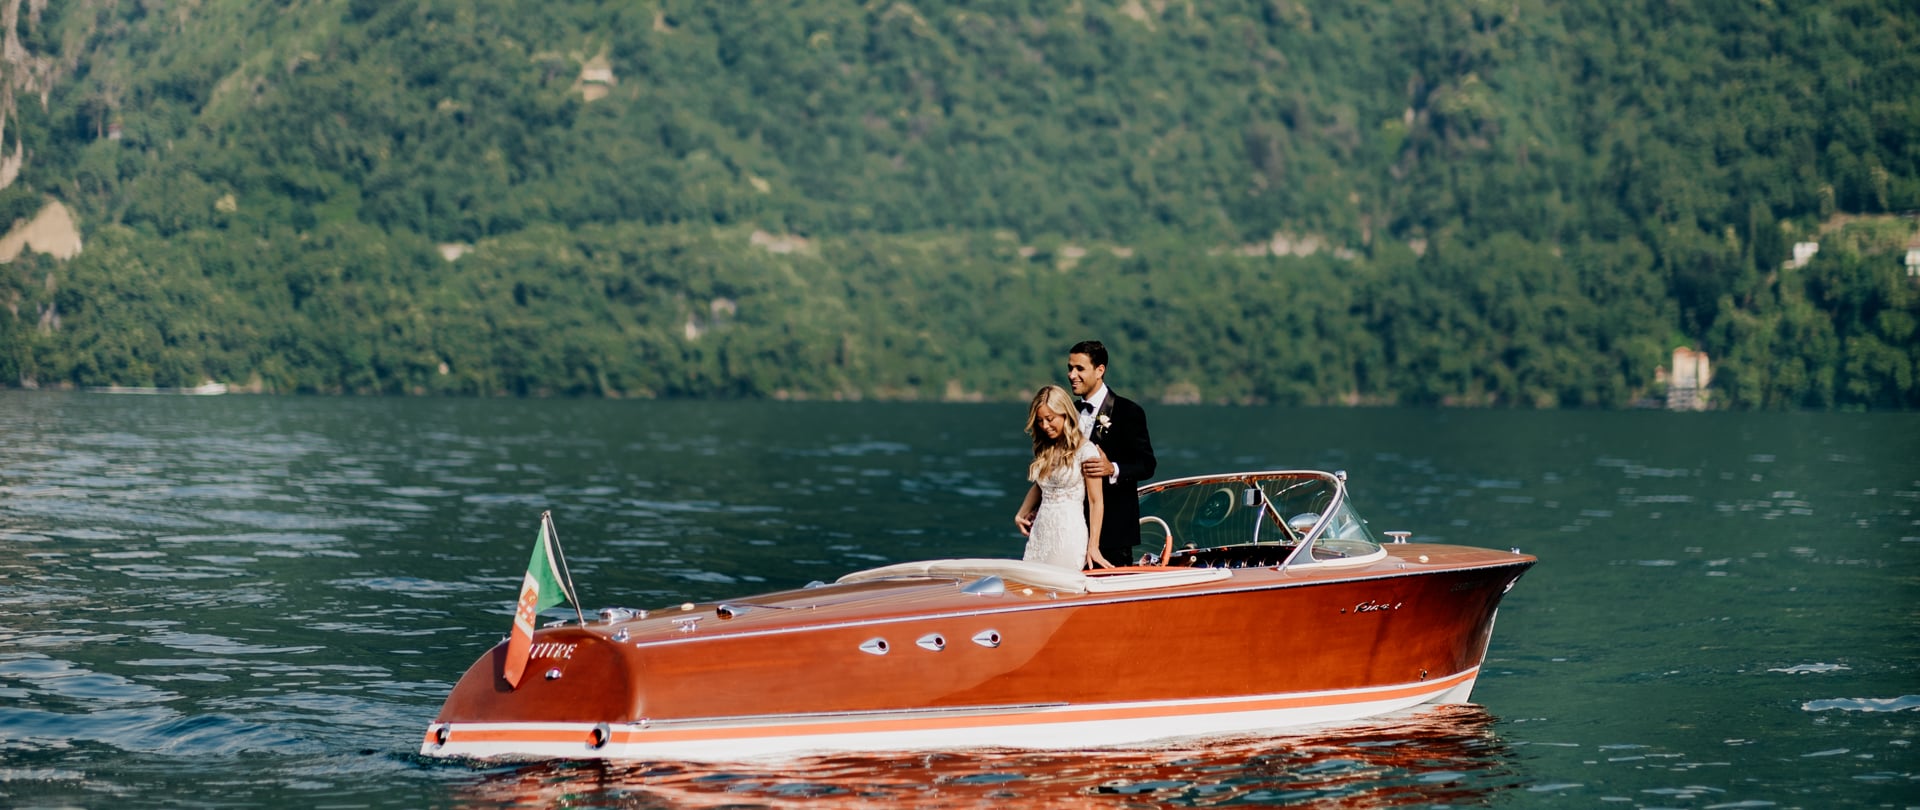 Emile & Tatiana Wedding Video Filmed at Lake Como, Italy